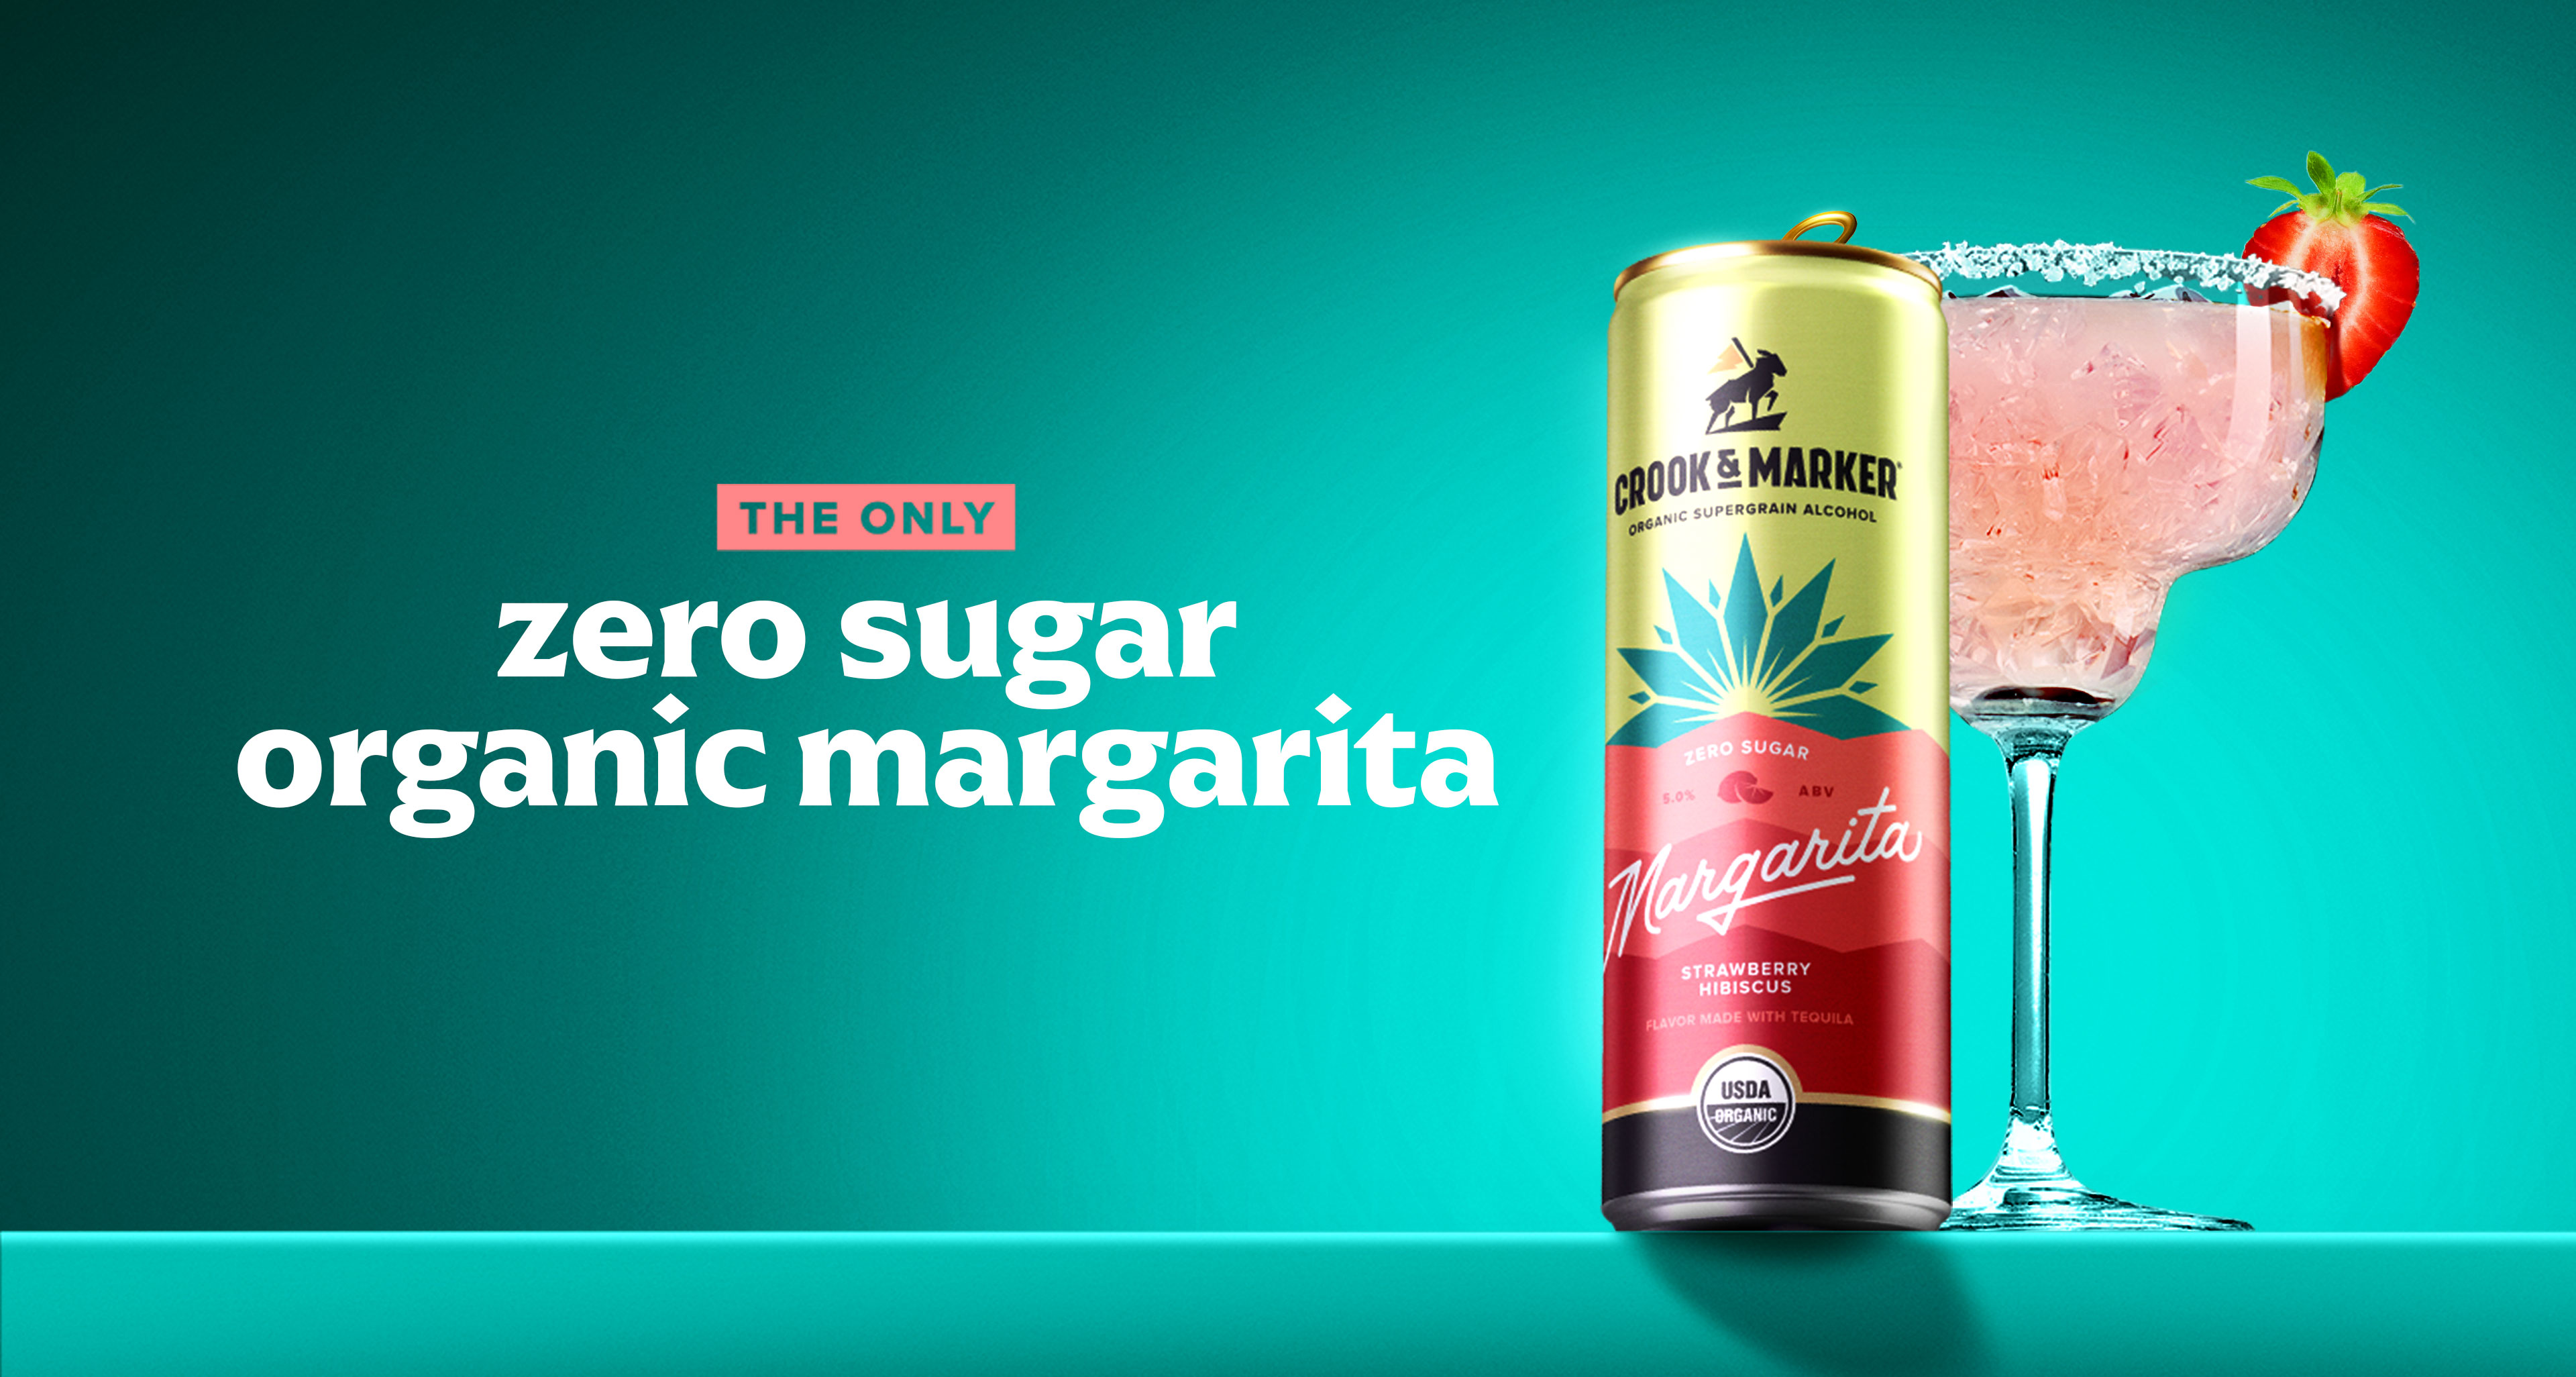 Crook & Marker - The Only Zero Sugar Organic Margarita